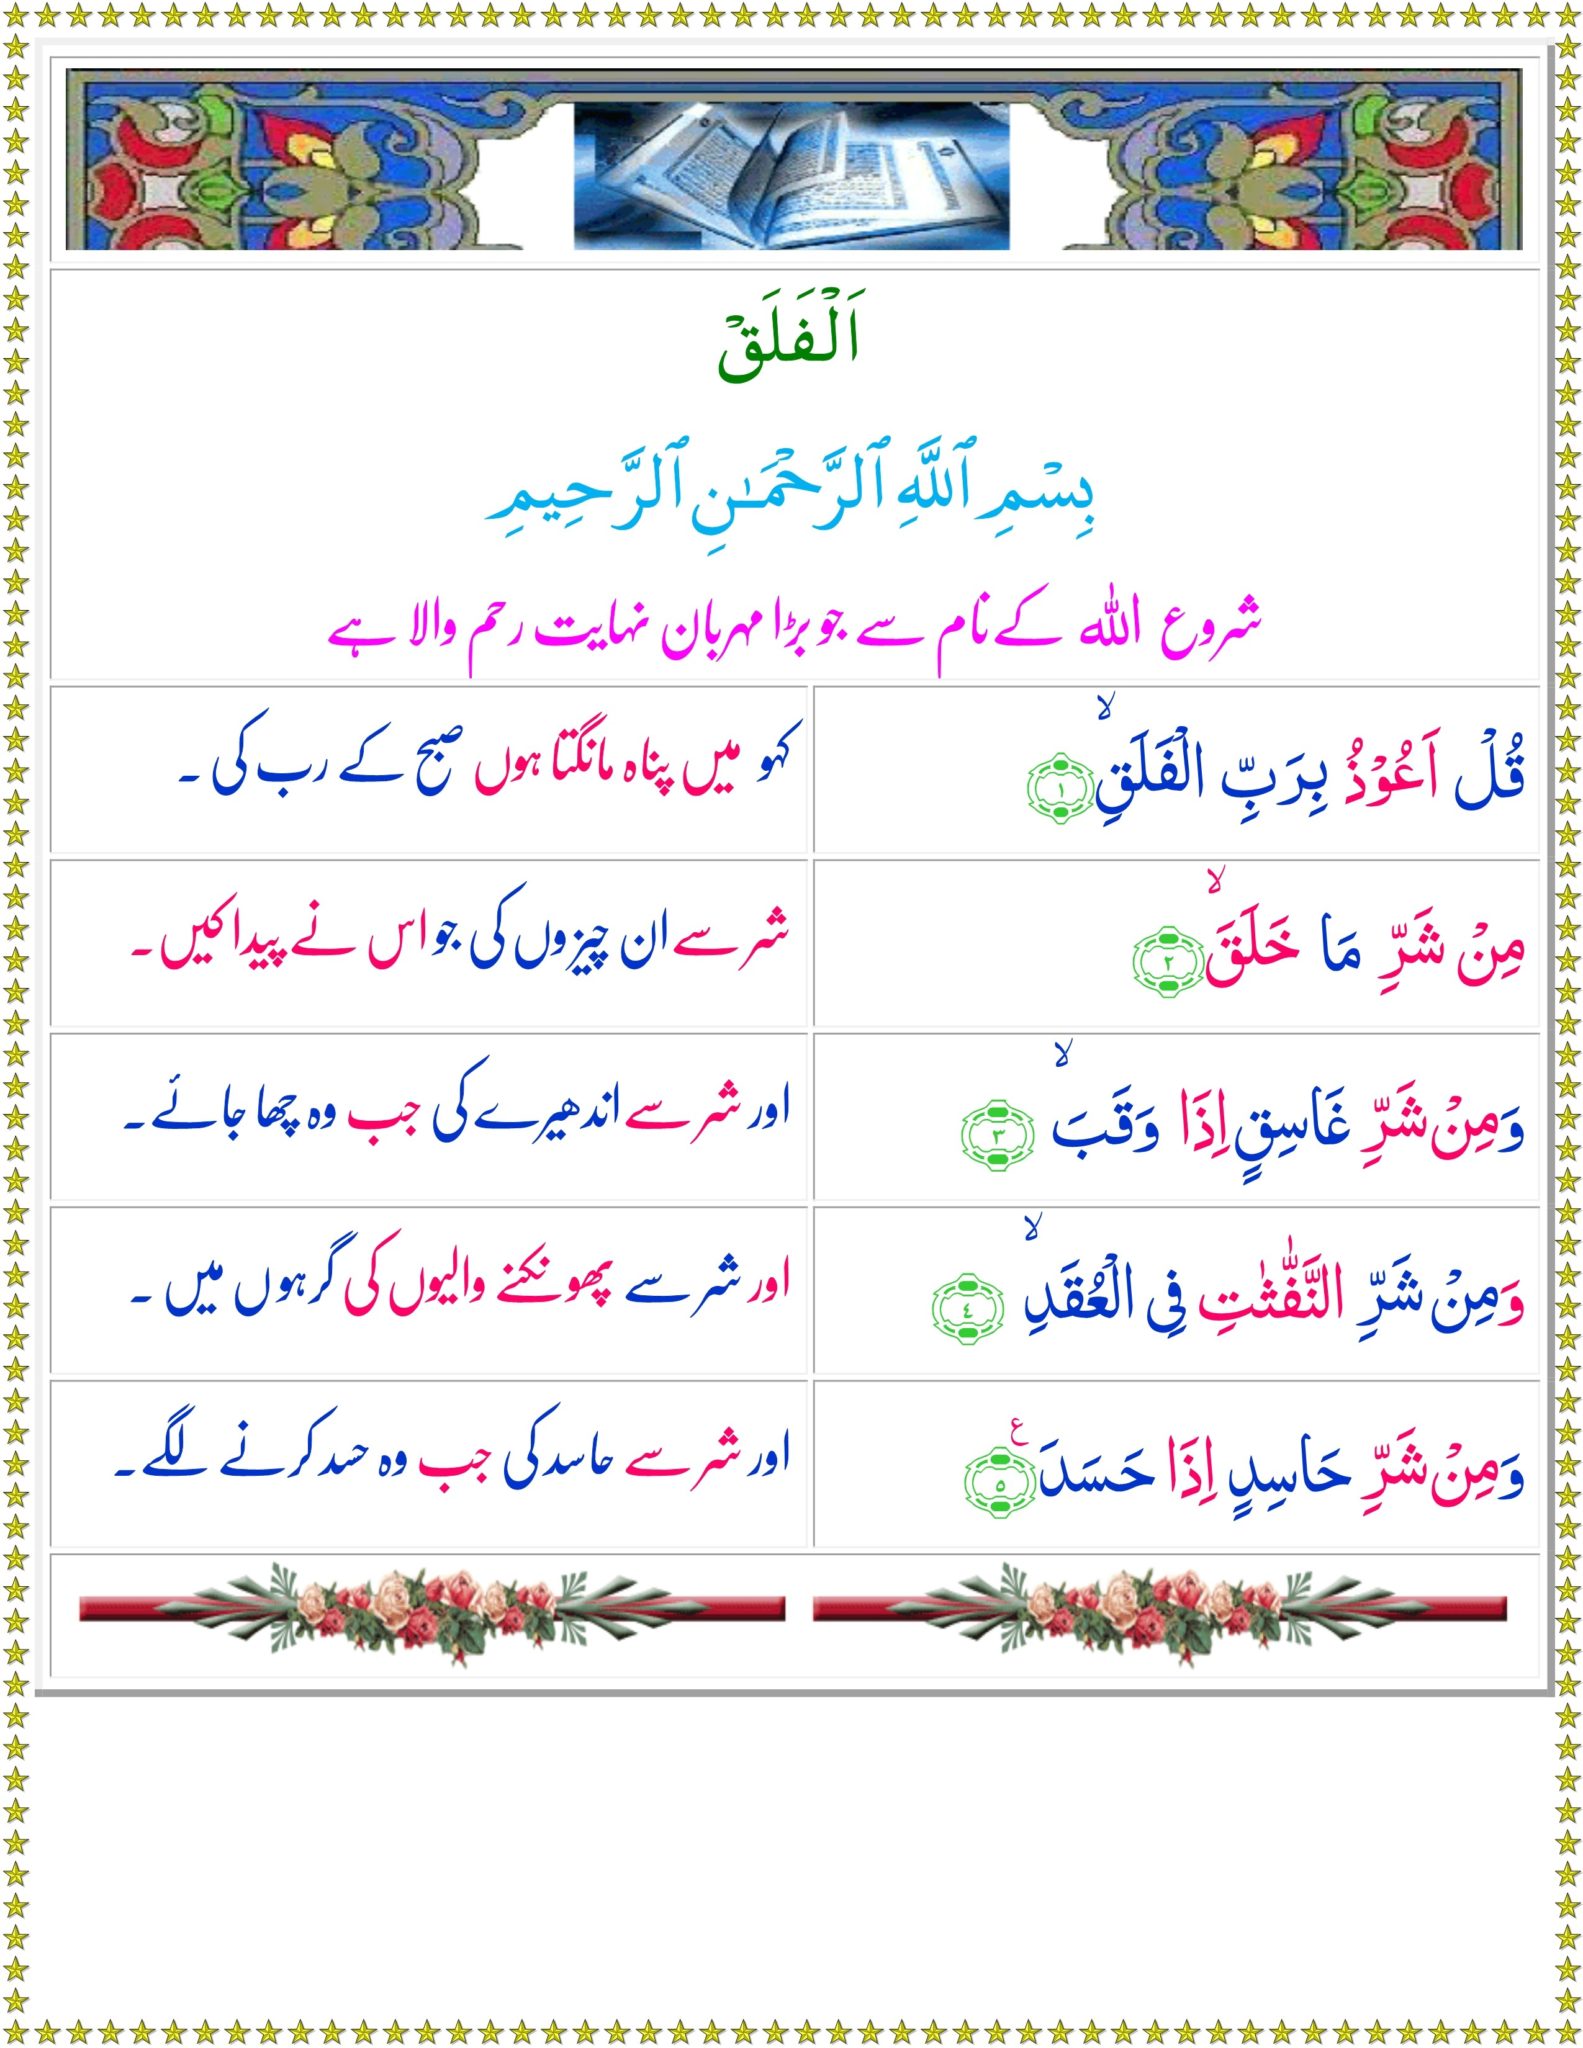 surah Falaq translation in Urdu